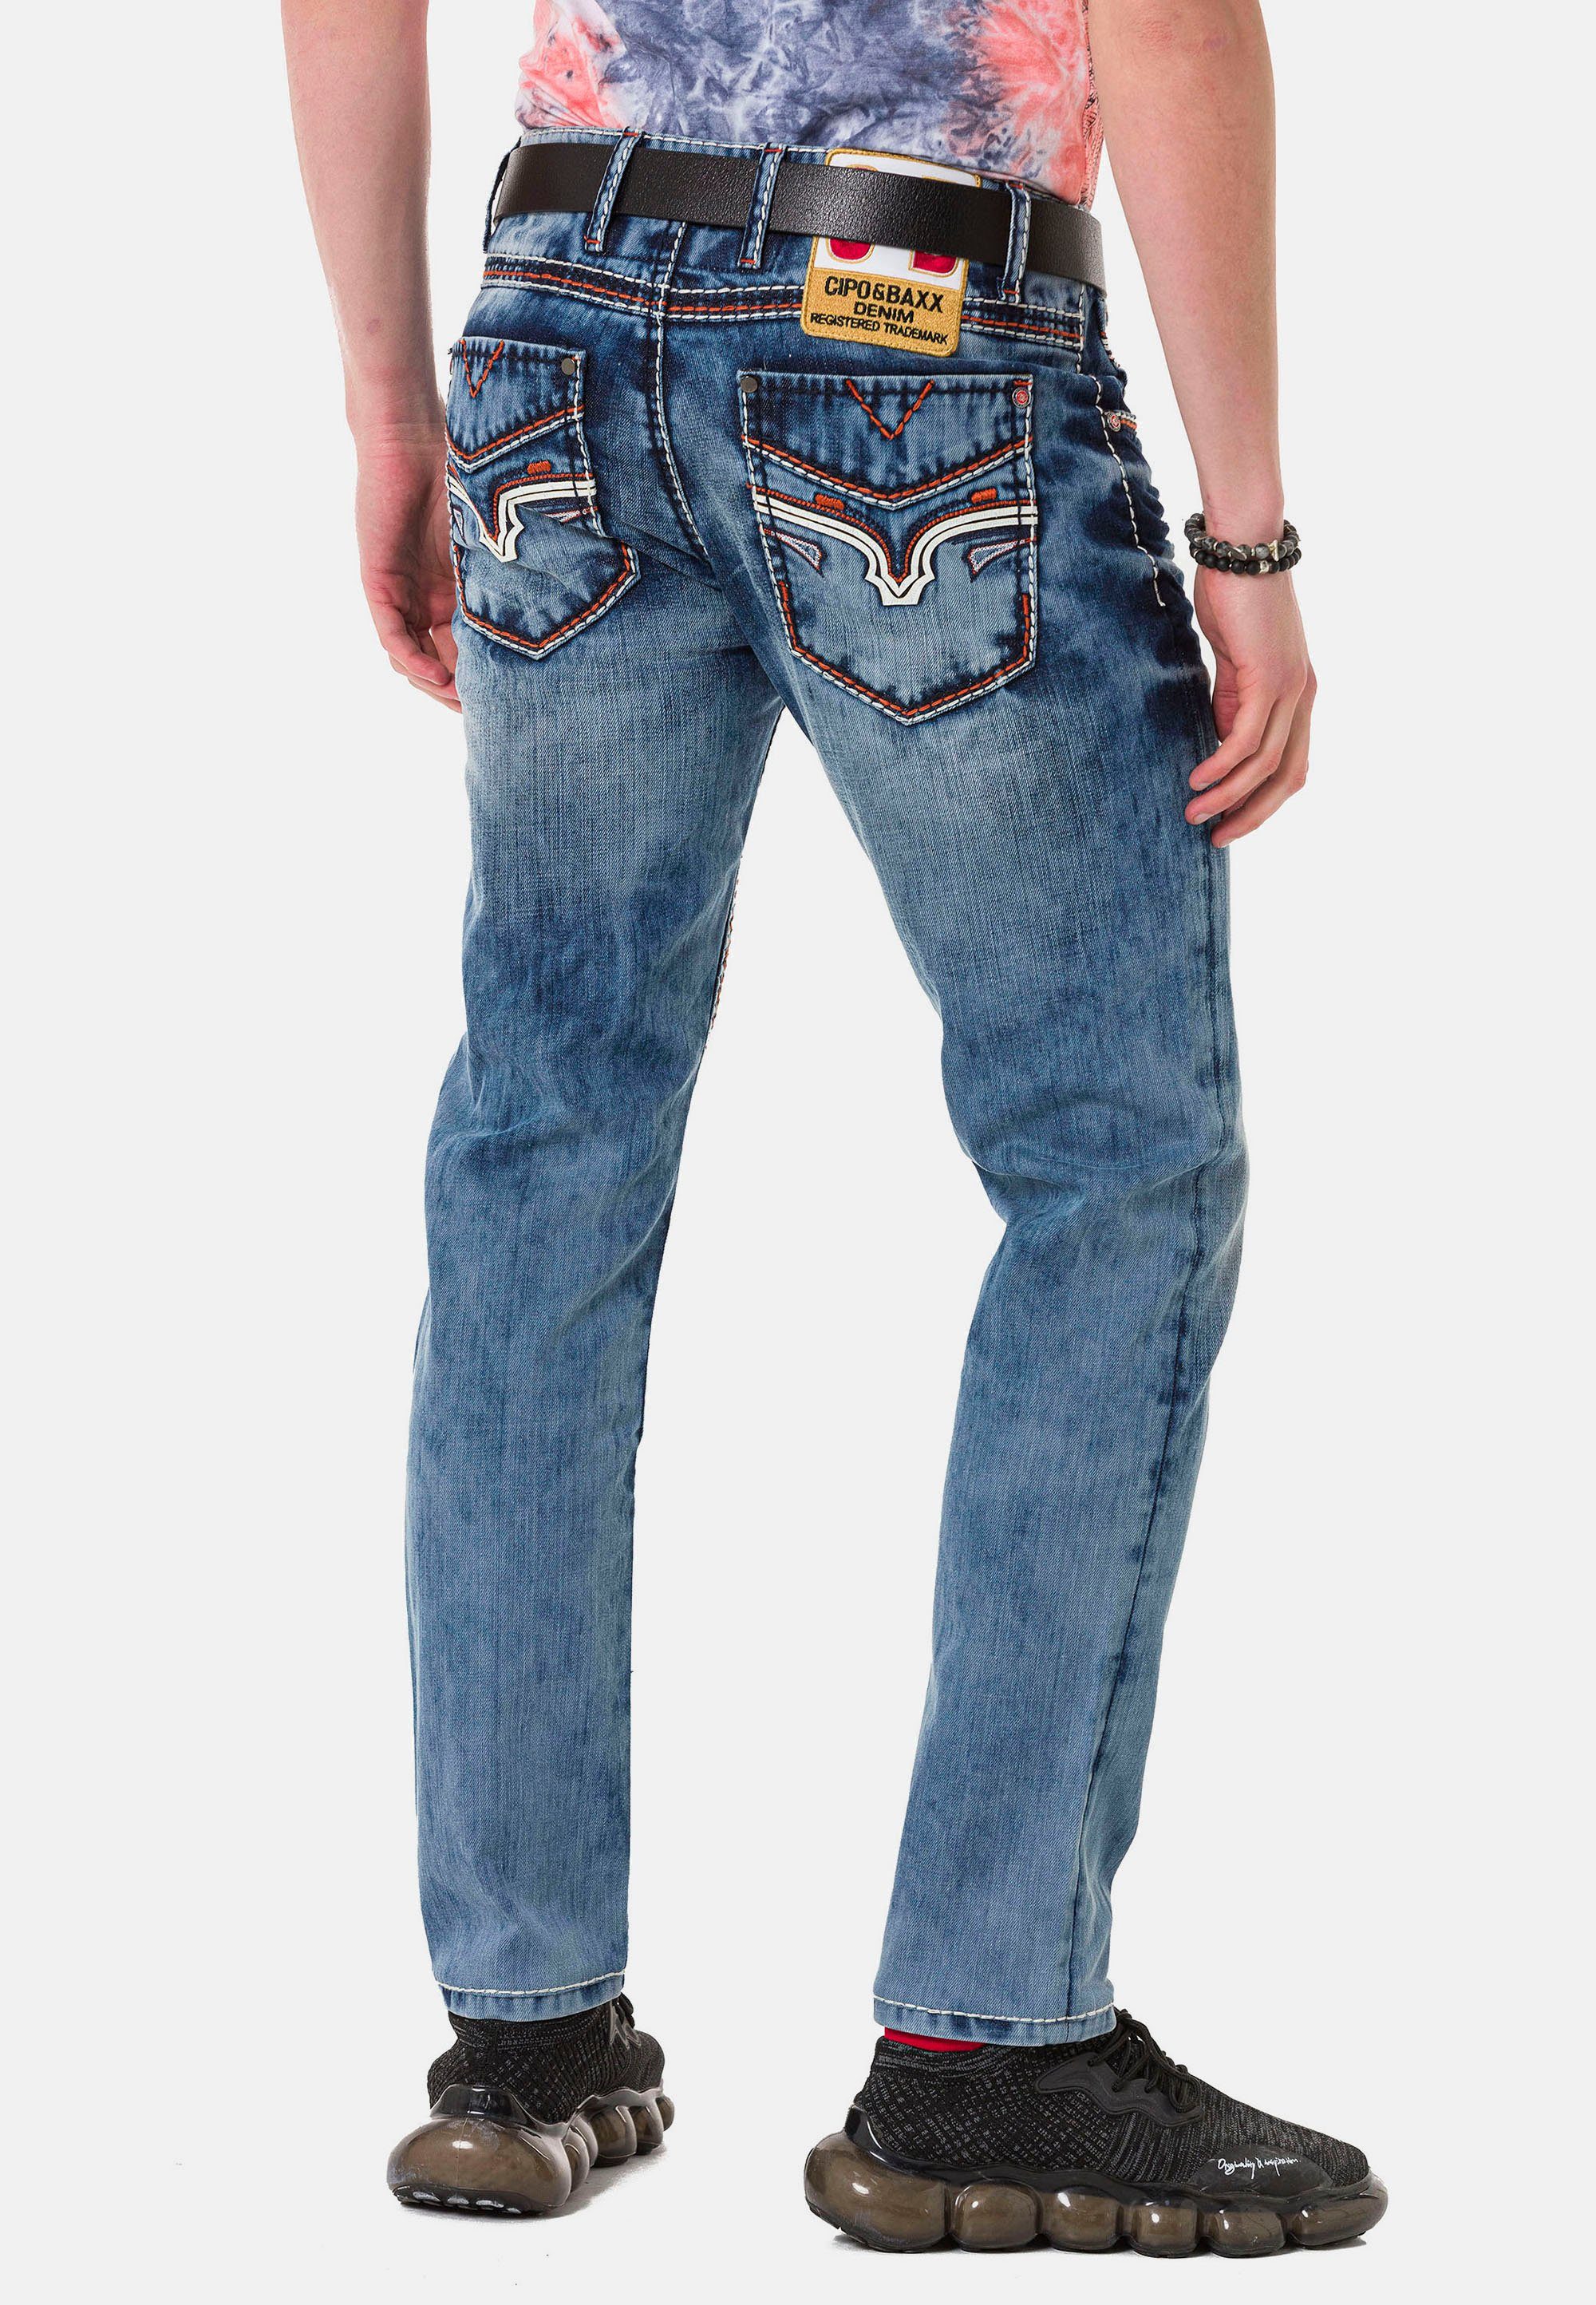 Cipo & Baxx kontrastfarbenen mit Nähten Straight-Jeans